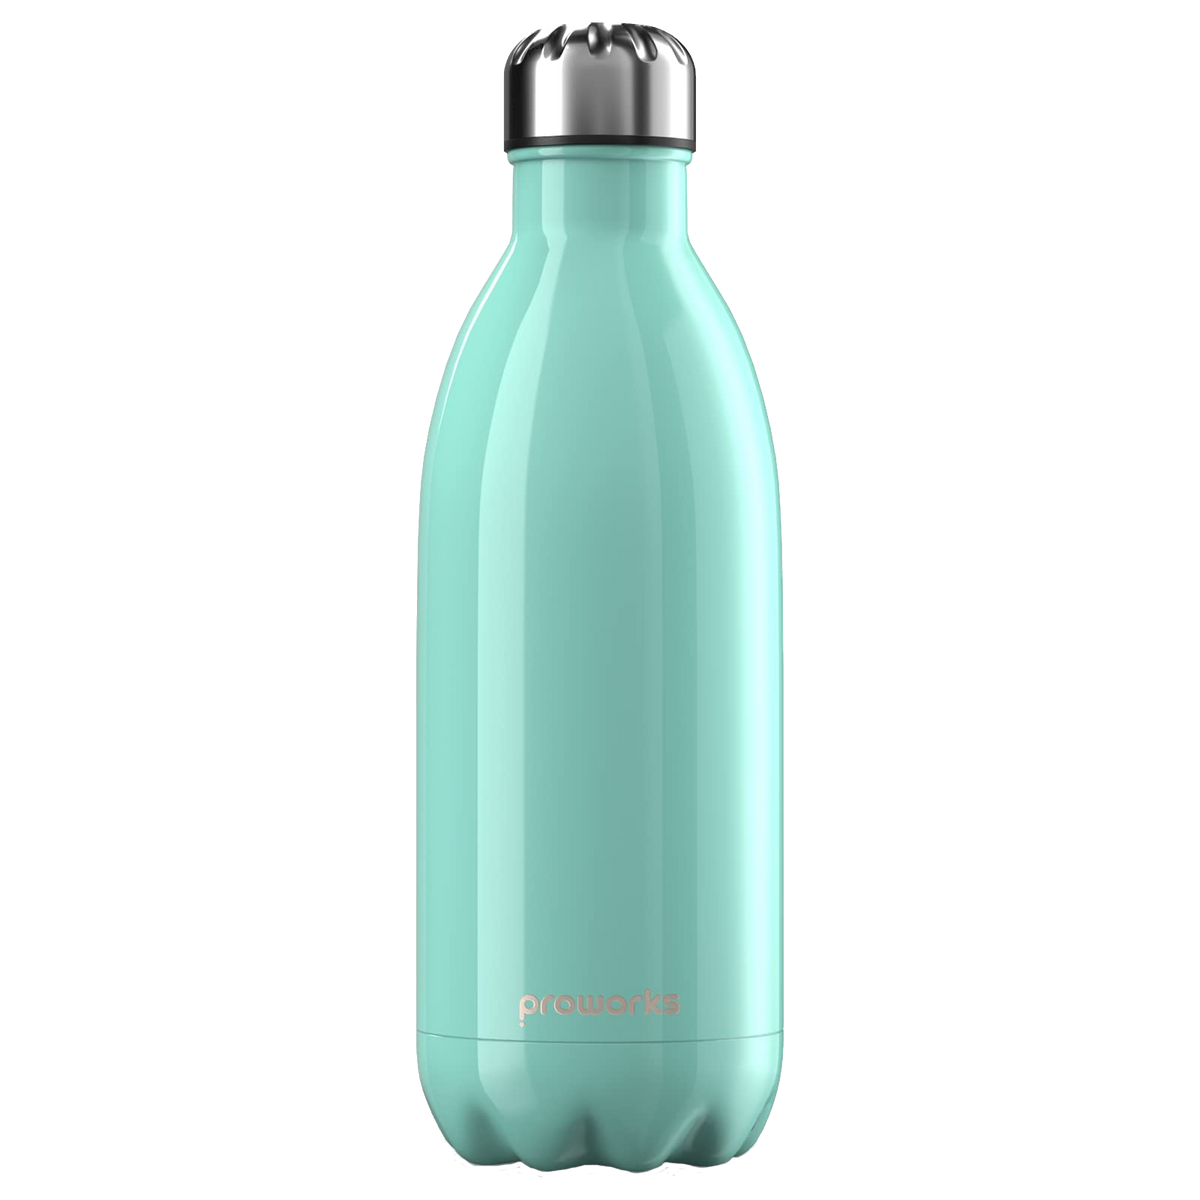 Deep clean your metal water bottle » Ocean Bottle